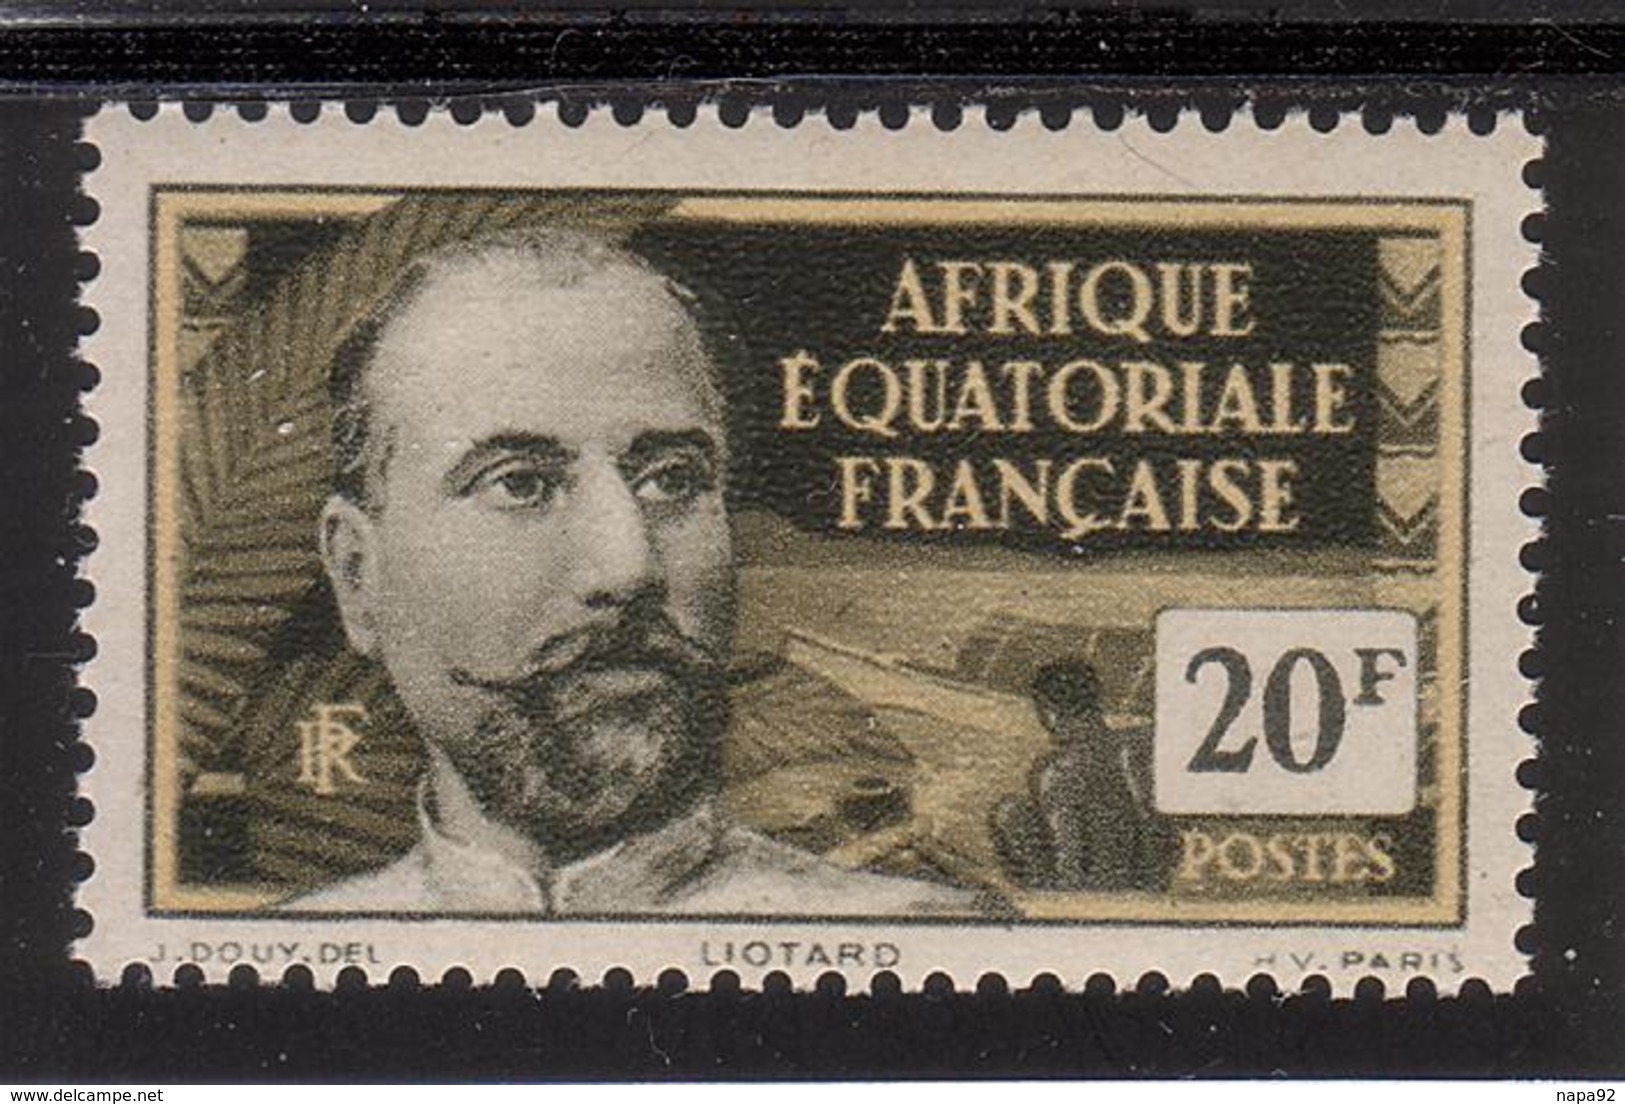 AFRIQUE EQUATORIALE FRANCAISE - AEF - A.E.F. - 1937 - YT 62** - Ongebruikt